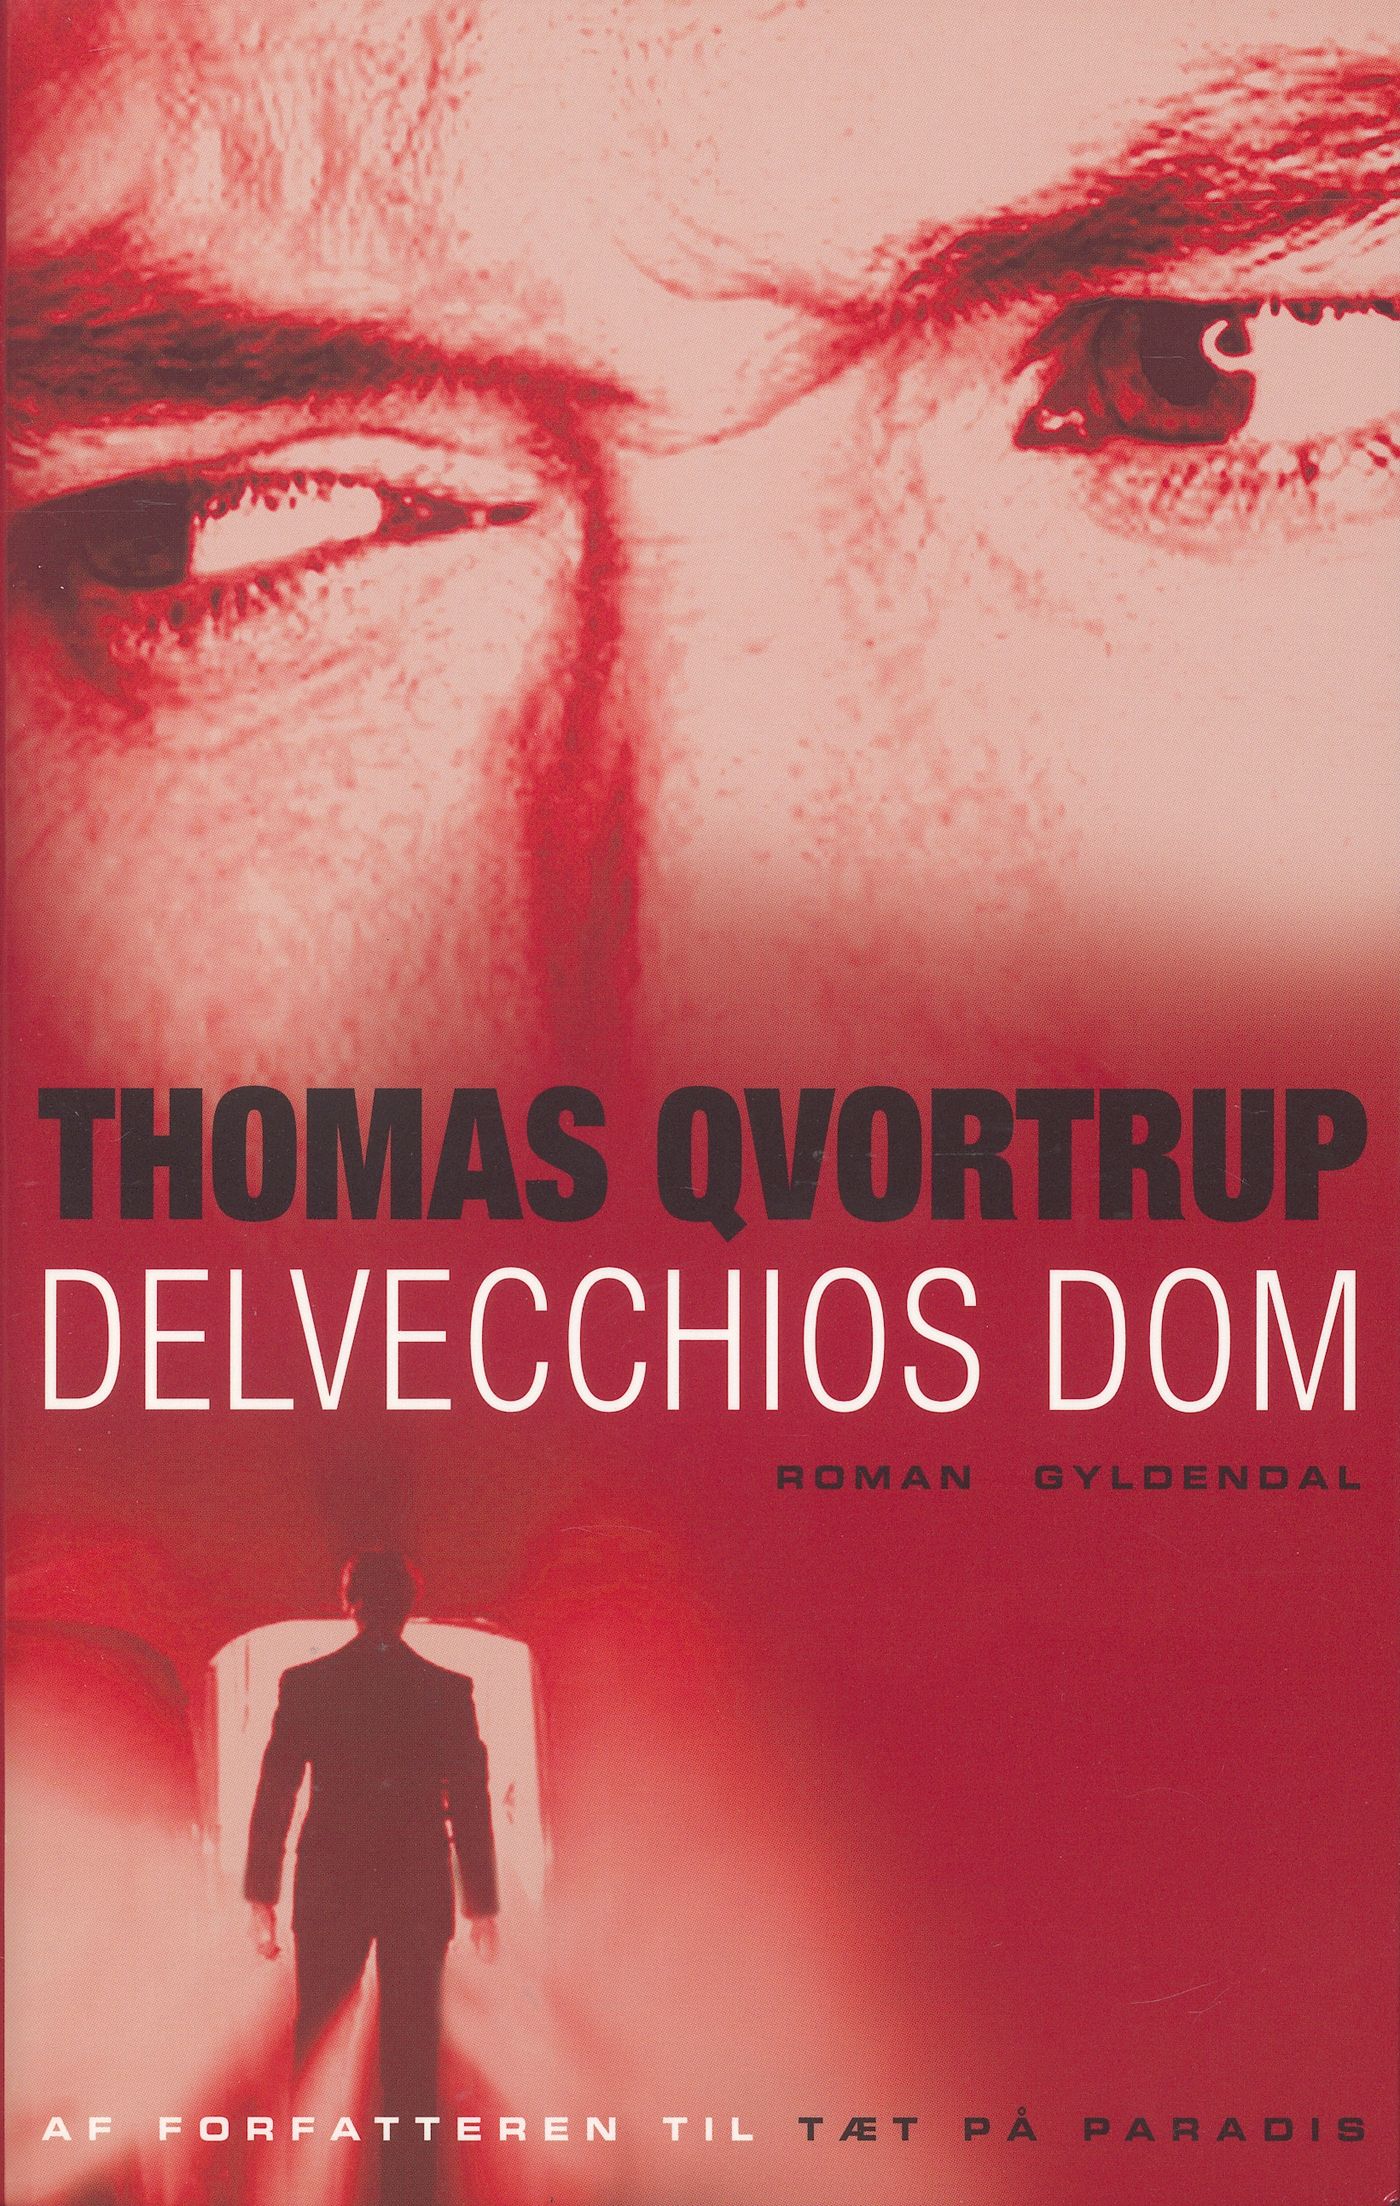 Delvecchios dom, e-bog af Thomas Qvortrup